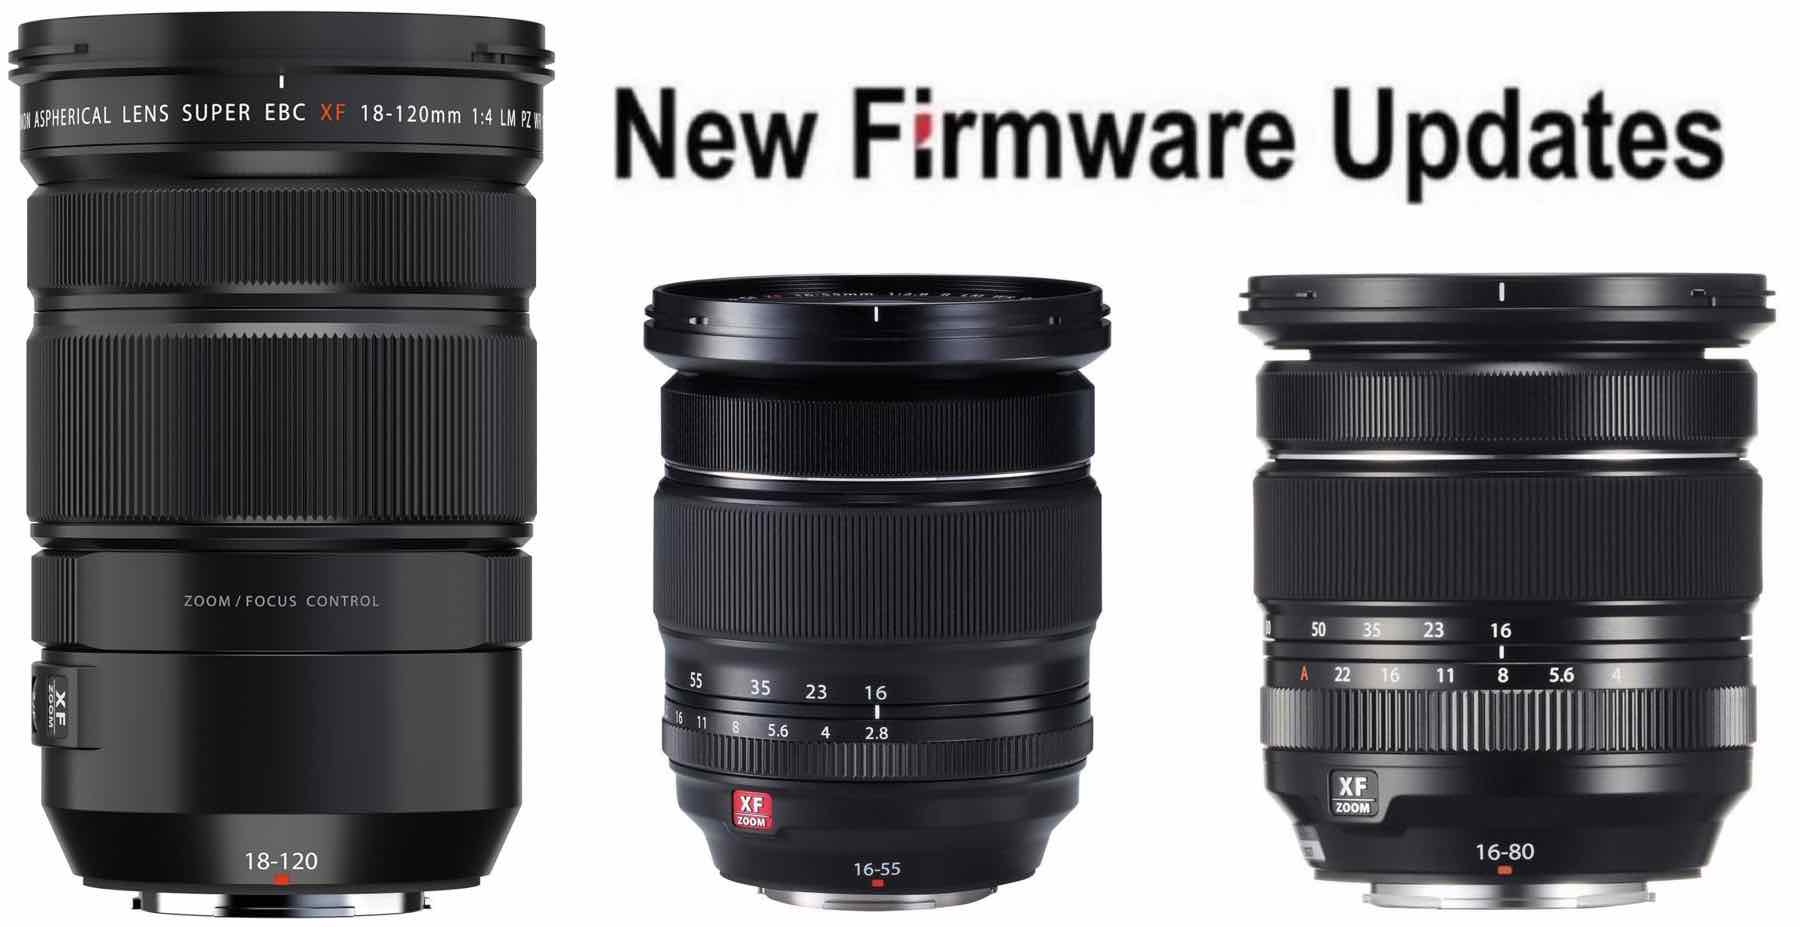 Fujifilm Releases Firmware Updates for XF16-55mmF2.8, XF16-80mmF4 and XF18-120mmF4  - Fuji Rumors